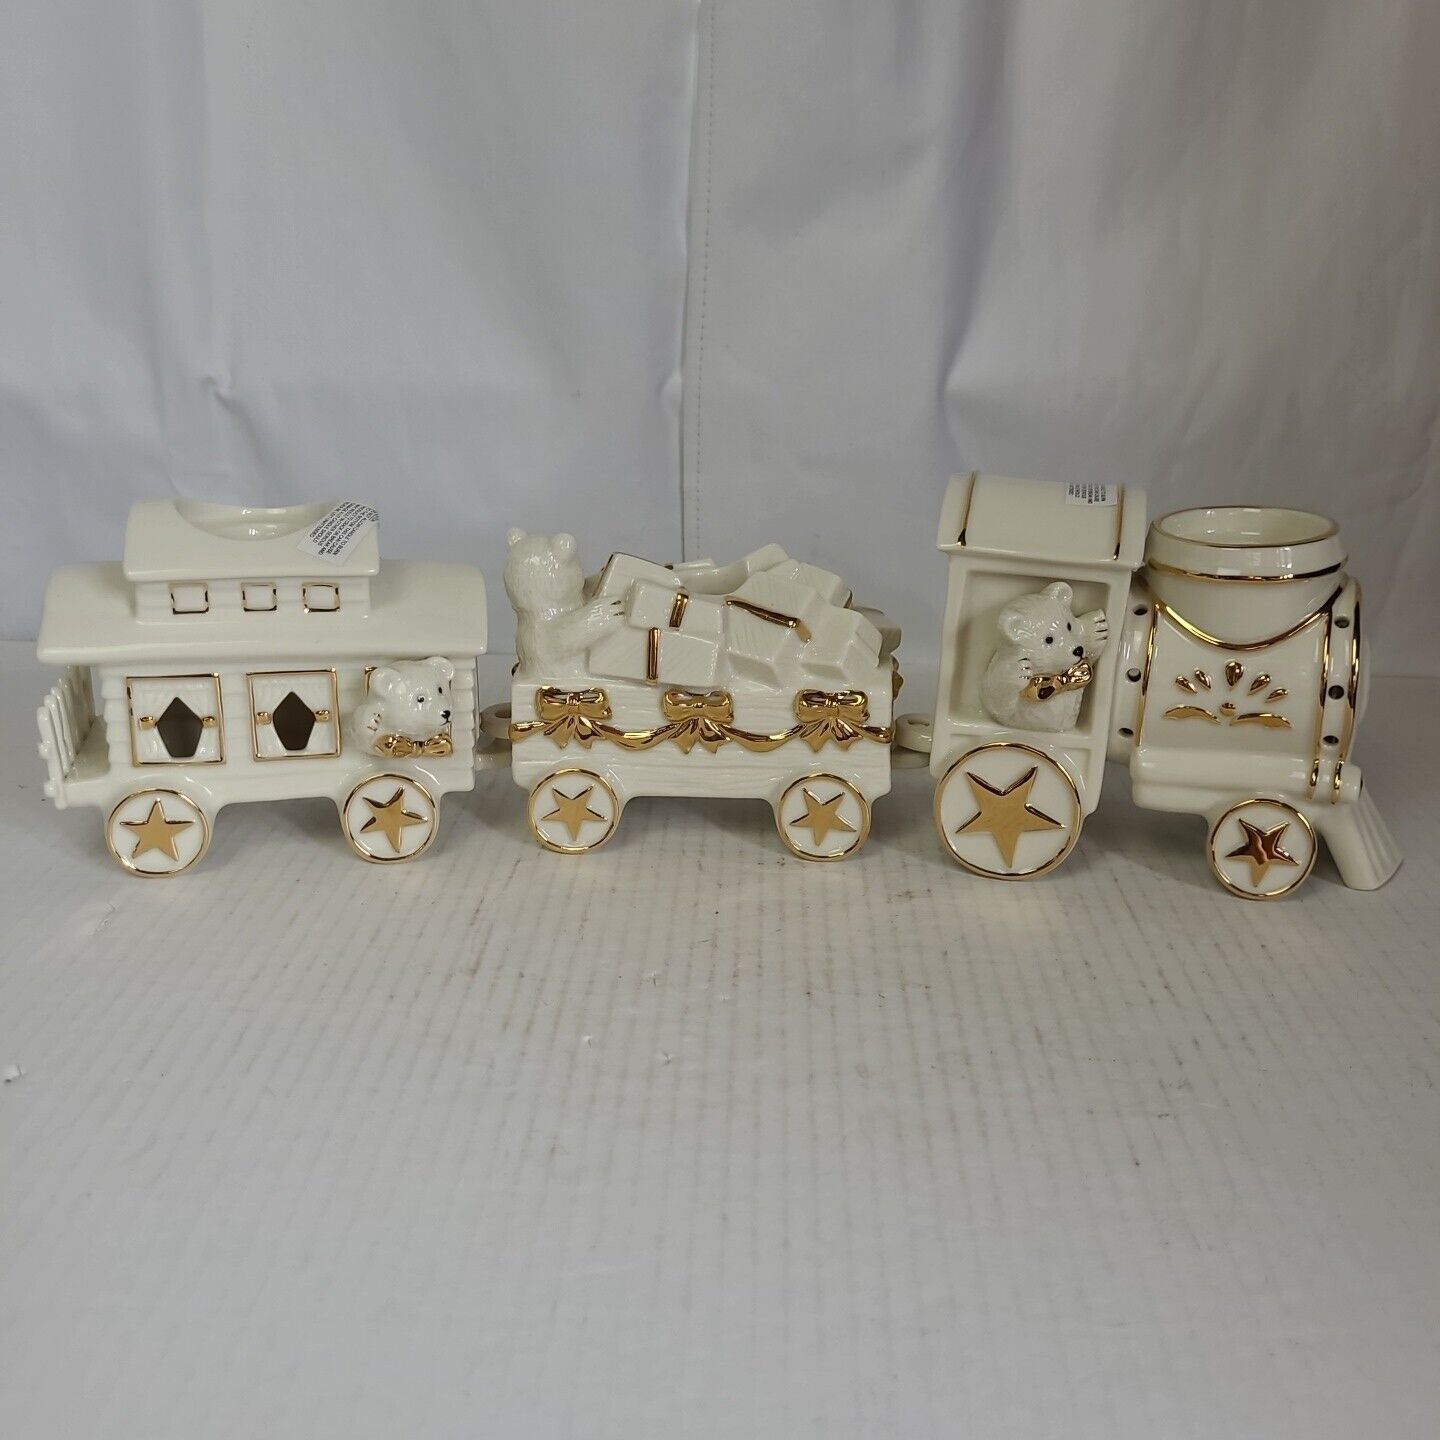 MIKASA -3 Piece Porcelain Train Holiday Elegance Candle Holder Set - Bear, Santa